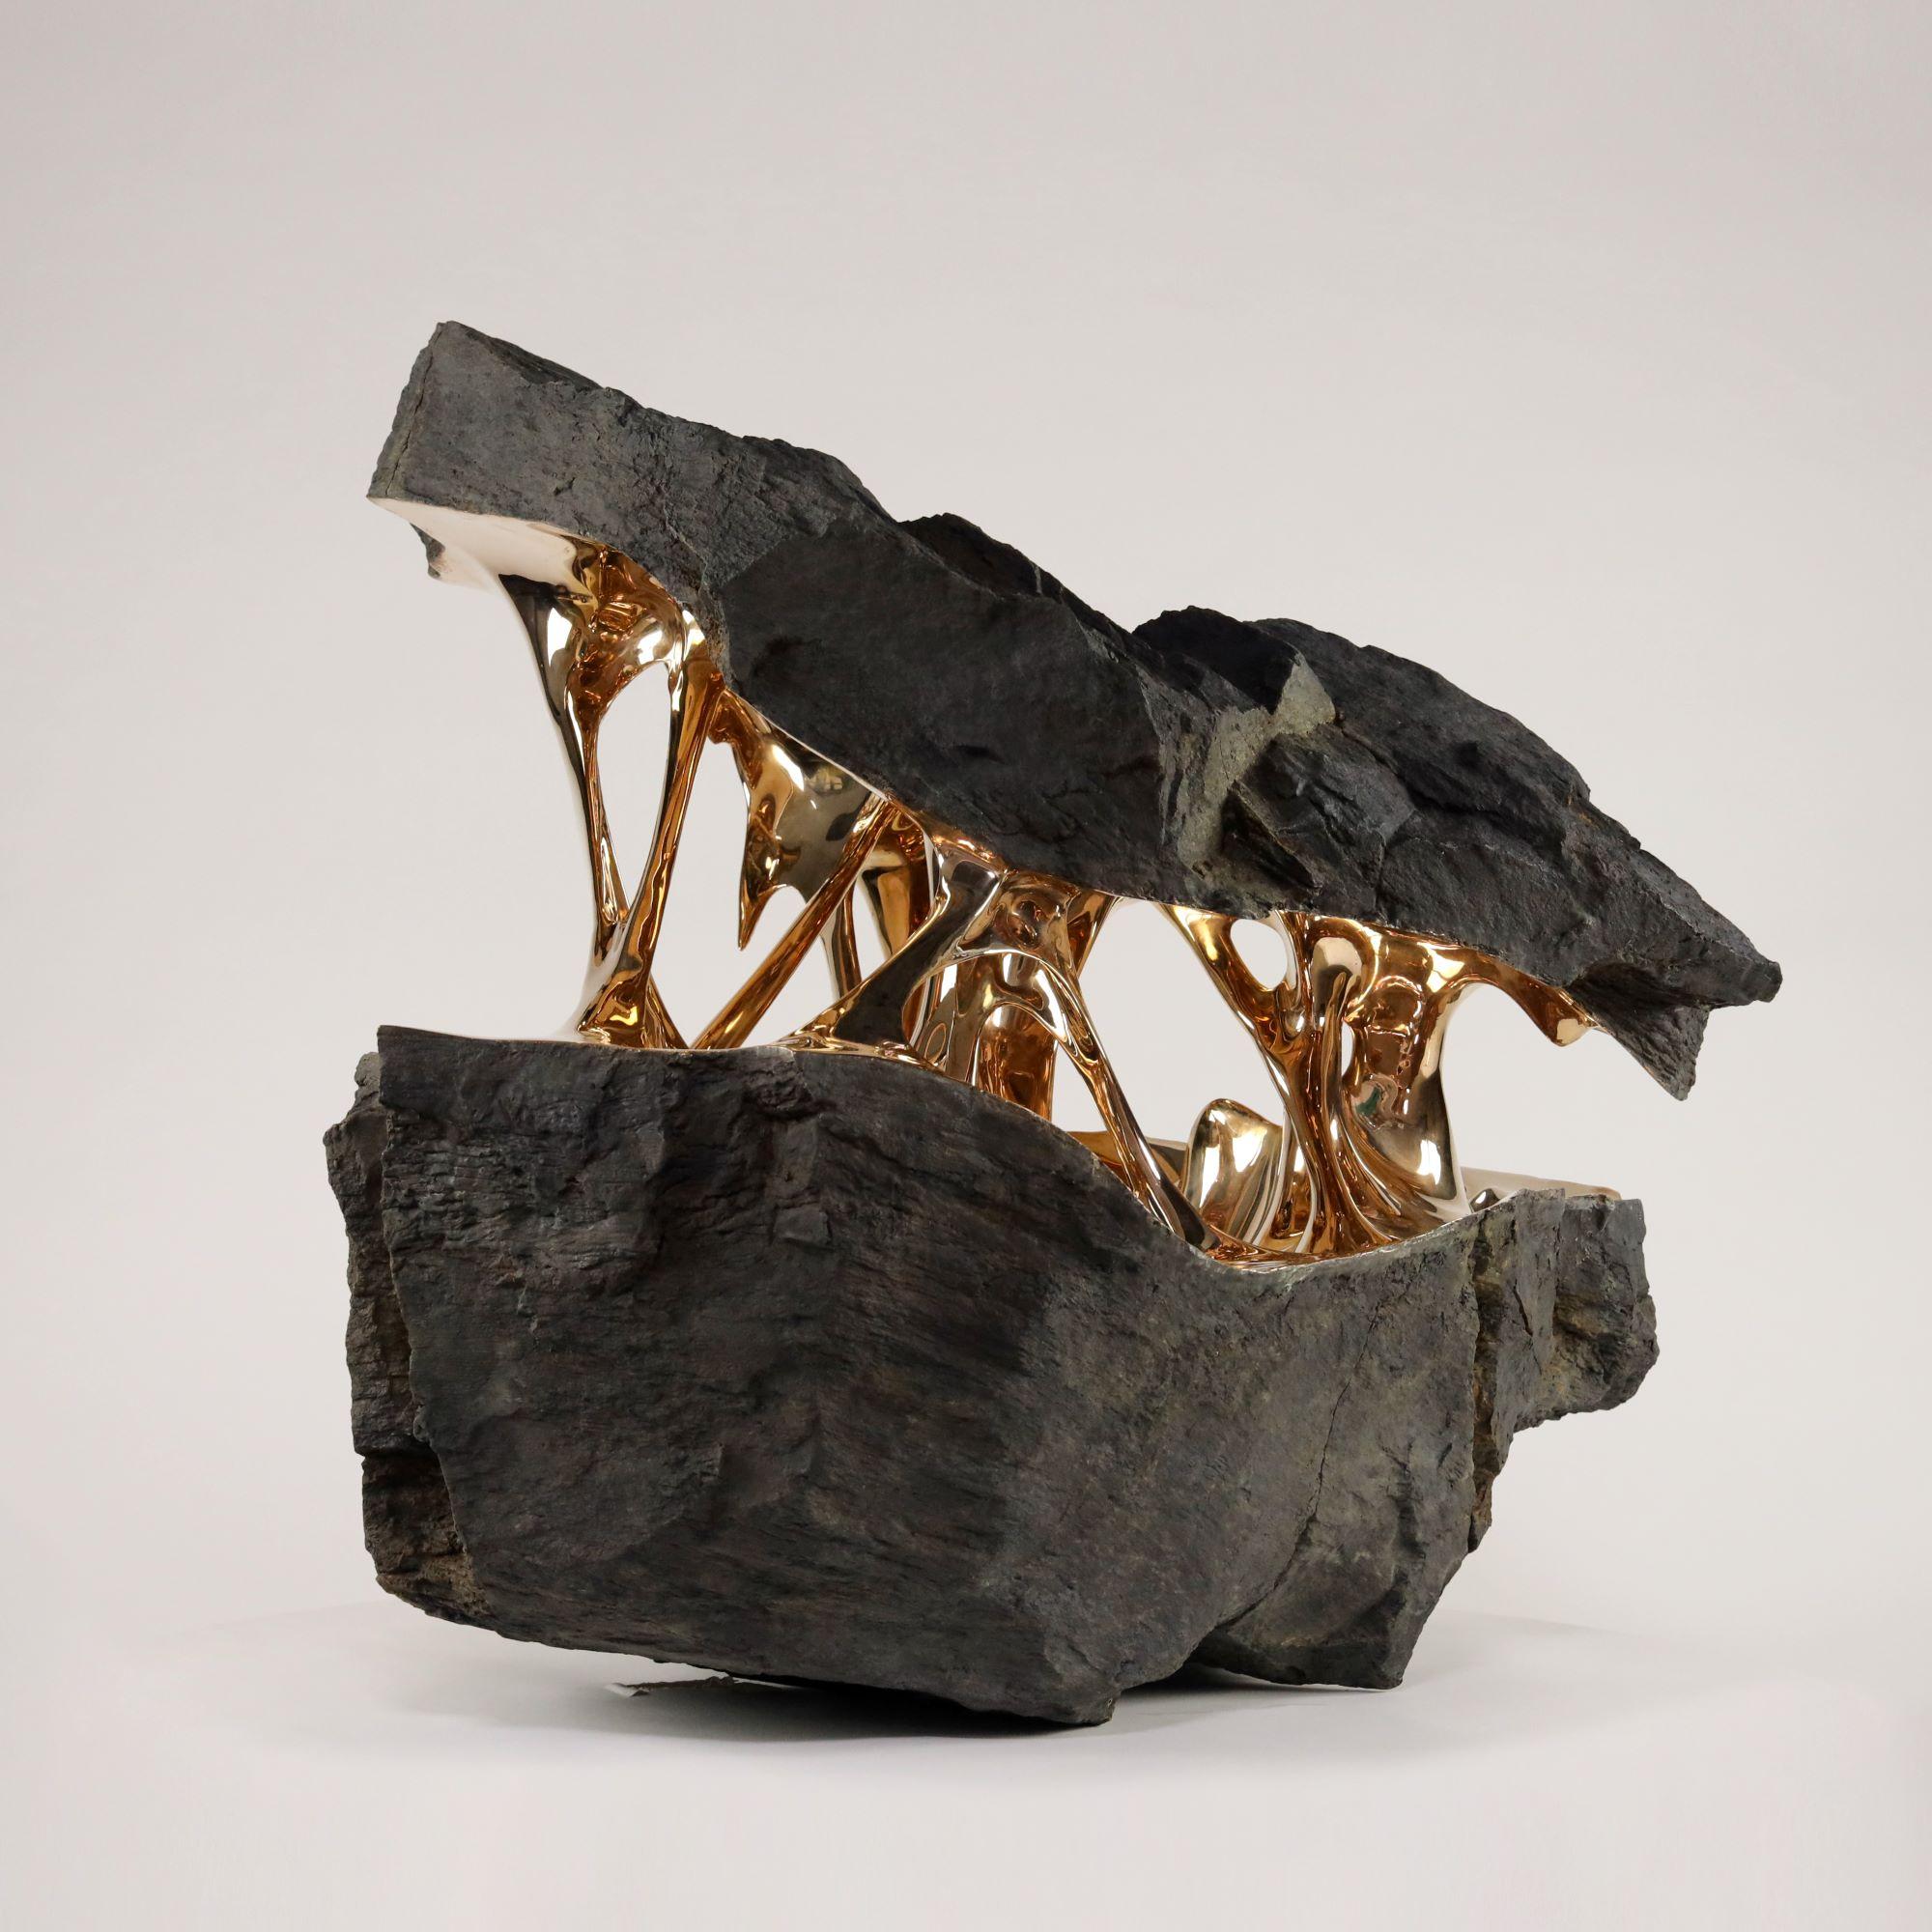 Gaïa by Romain Langlois - Rock-like bronze sculpture, golden, abstract For Sale 14